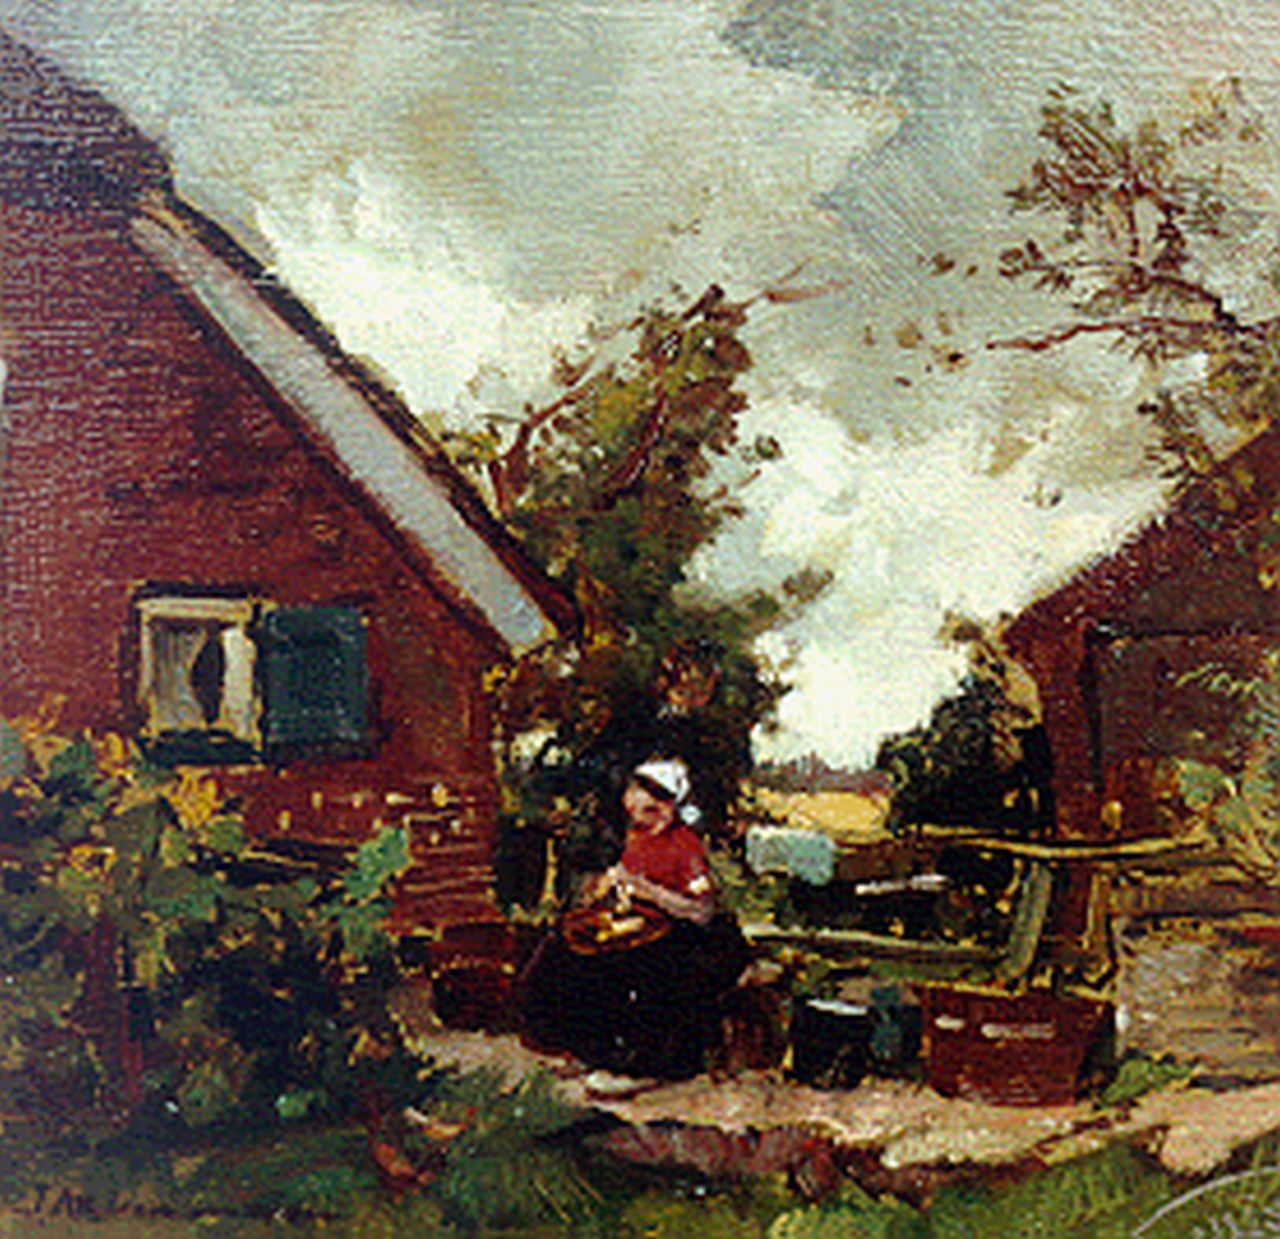 Akkeringa J.E.H.  | 'Johannes Evert' Hendrik Akkeringa, Boerenvrouw op haar erf, olieverf op paneel 15,7 x 16,2 cm, gesigneerd linksonder